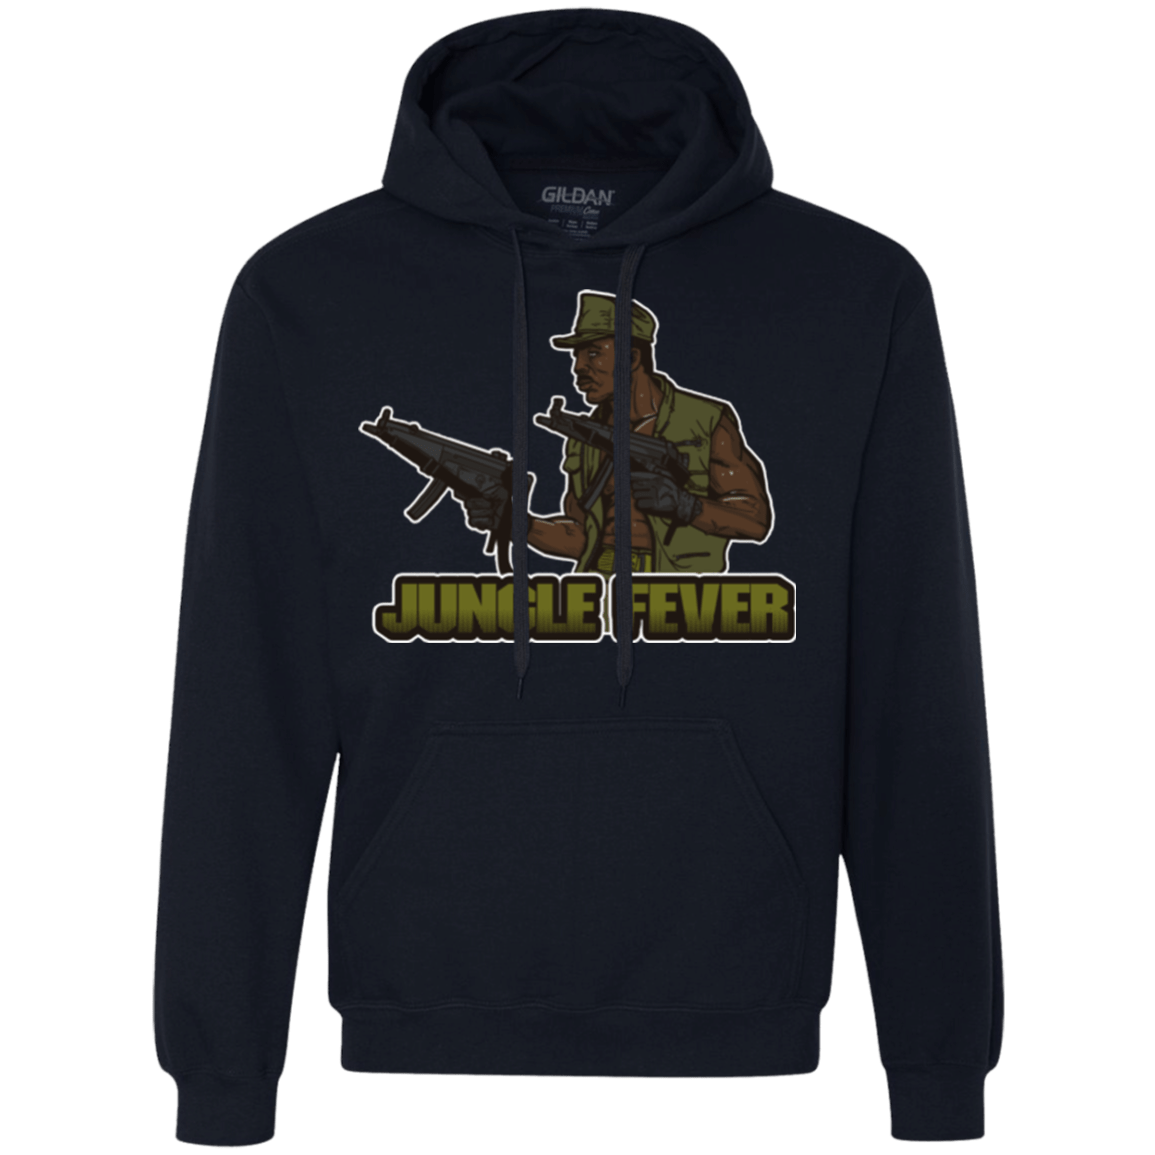 Sweatshirts Navy / Small Jungle Fever Premium Fleece Hoodie